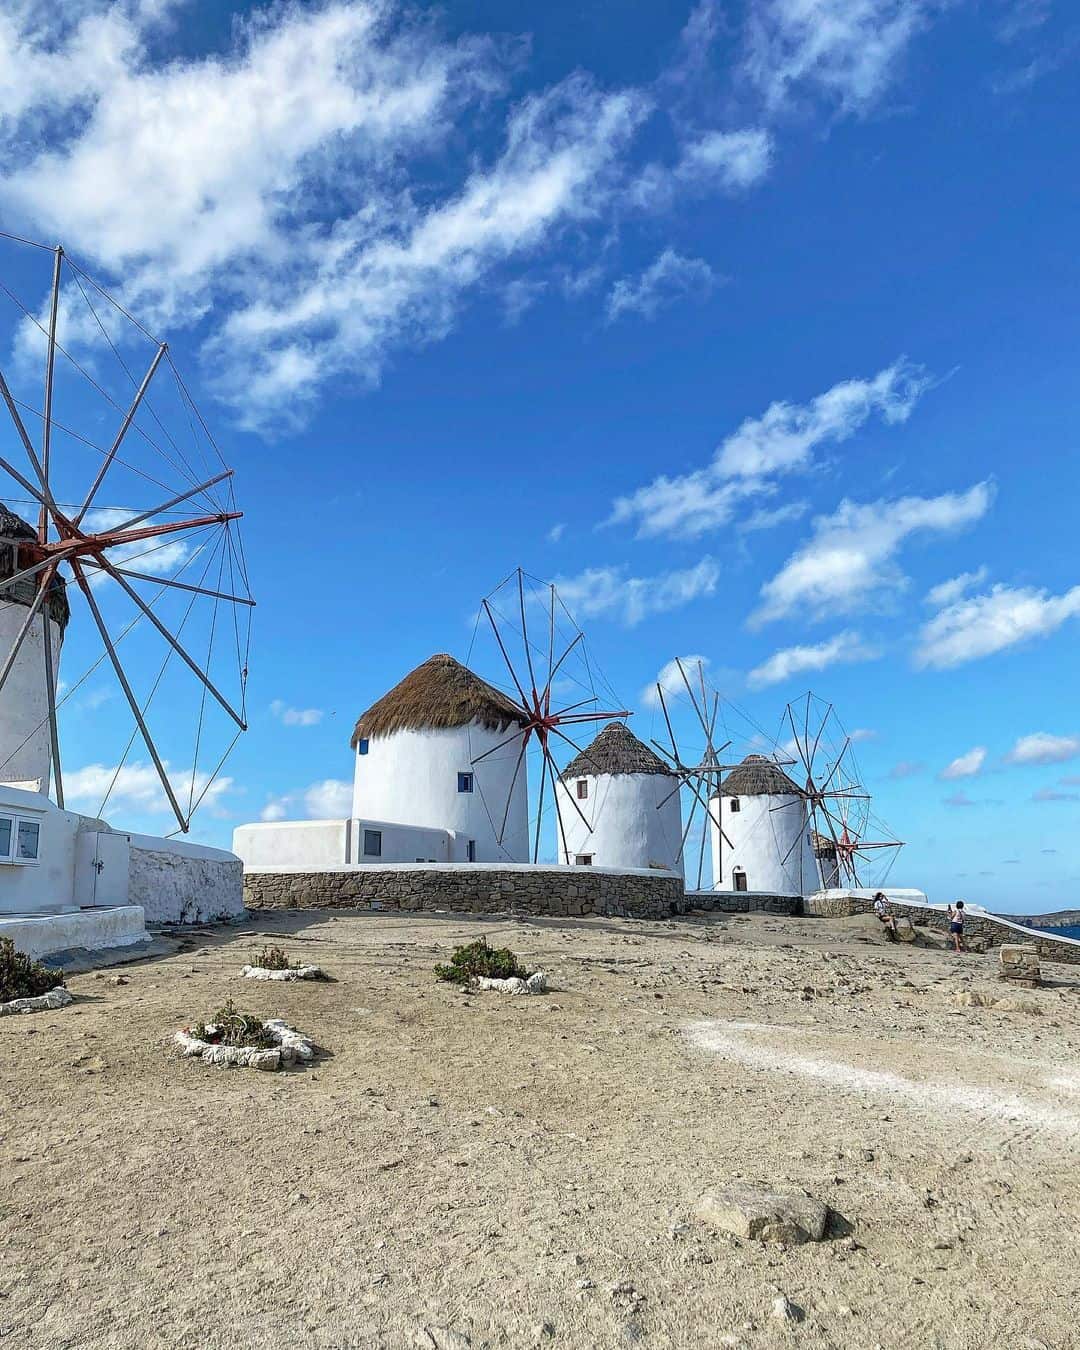 Best Greek islands to visit in October